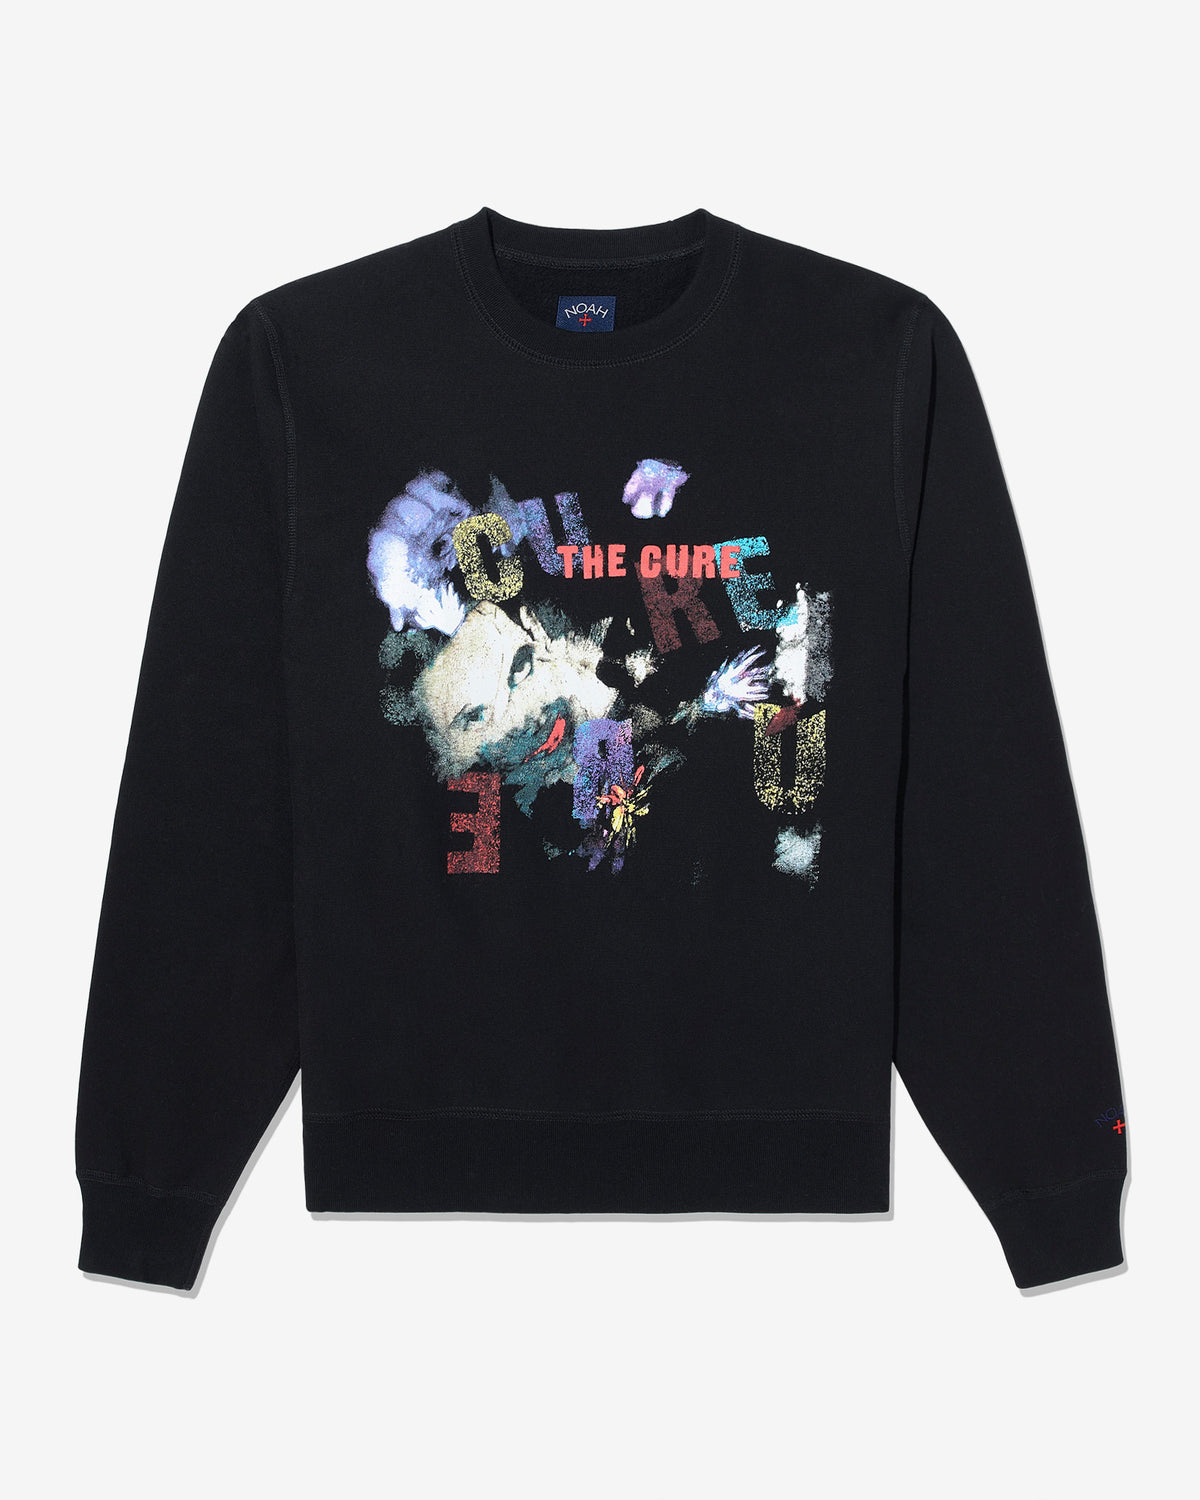 Noah x The Cure Crewneck Sweatshirt